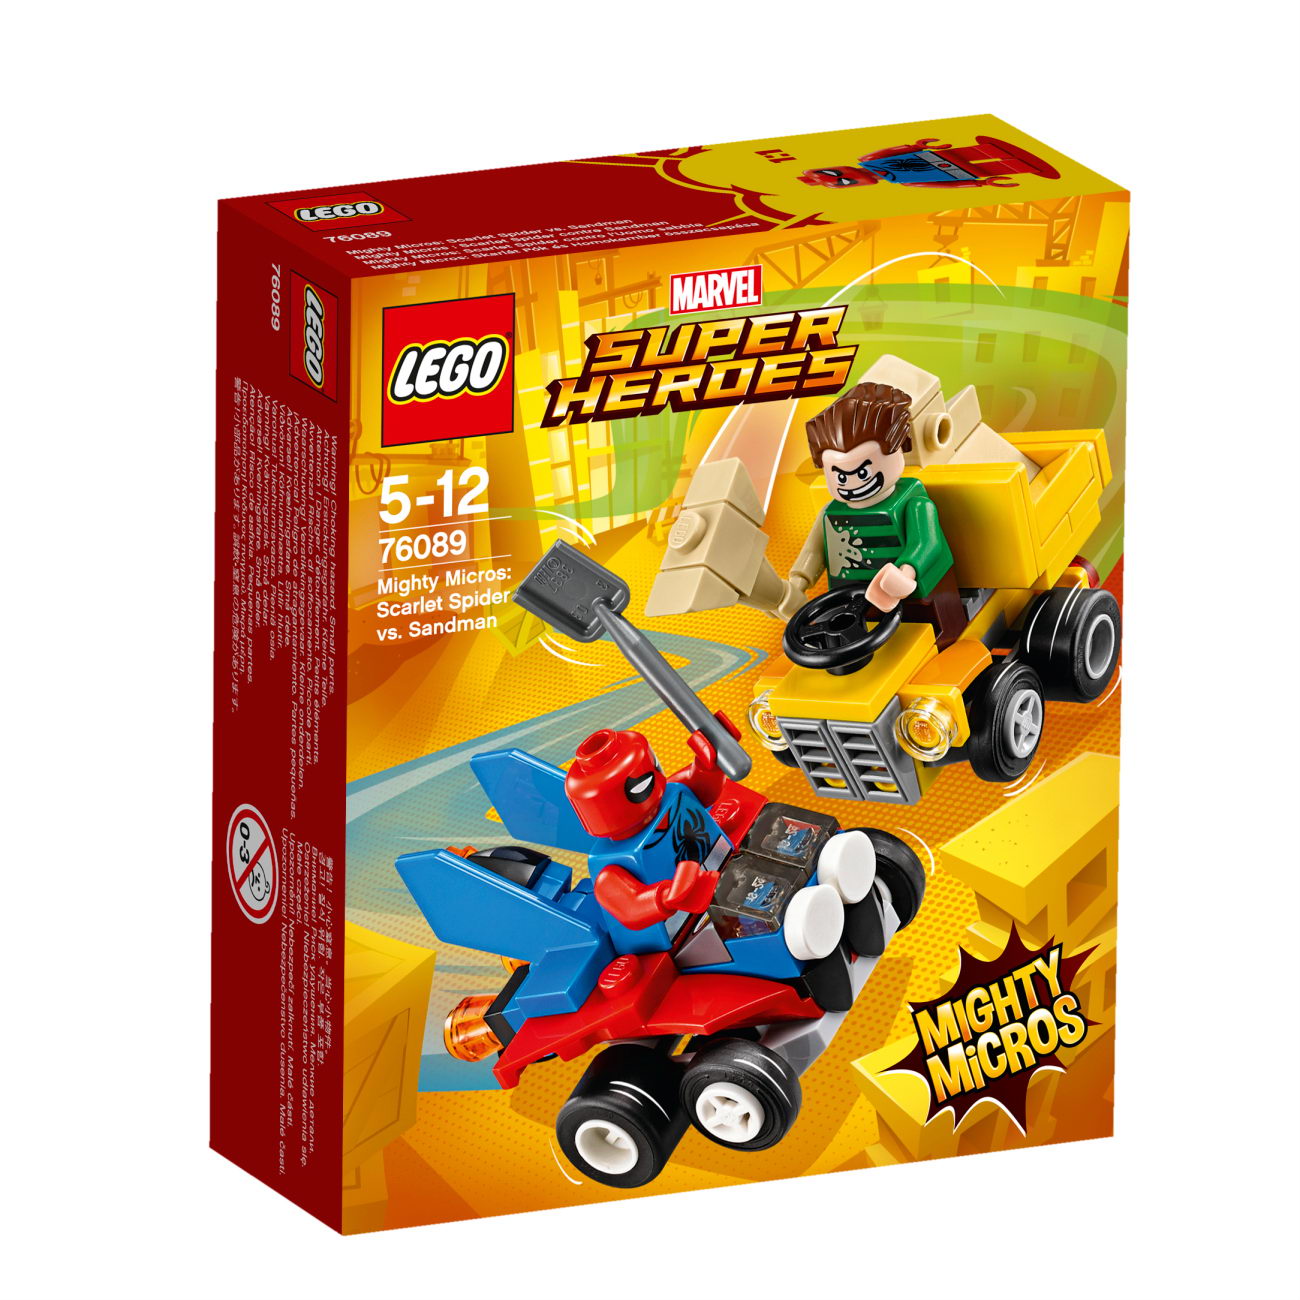 LEGO Marvel Super Heroes 76089 - Mighty Micros: Scarlet Spider vs. Sandman